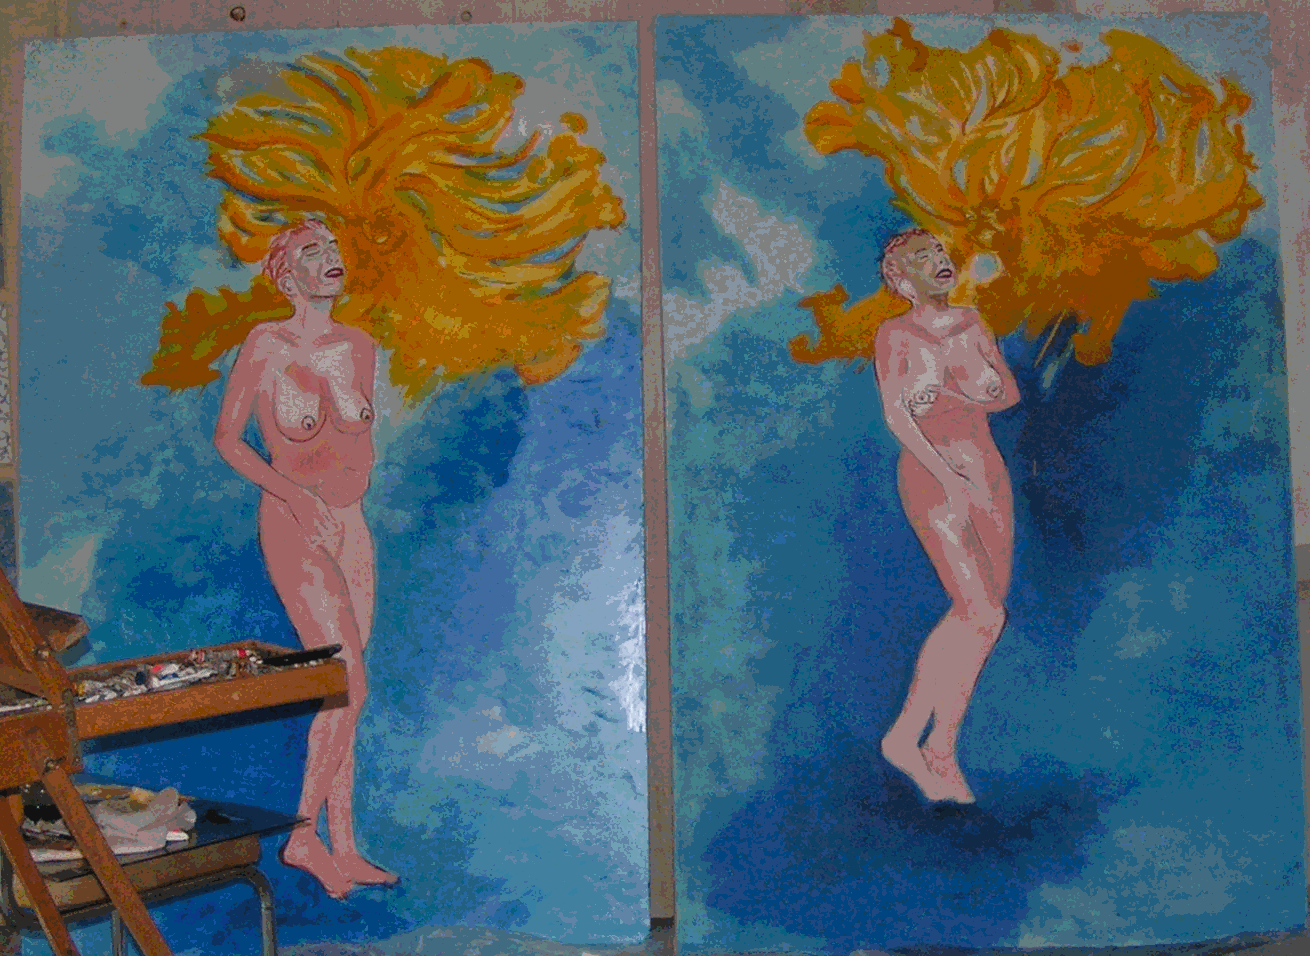 Woman with a cadmiun dream / woman in a cadmium shower canvas by Mark Philip Stone (Mark Pilipski)